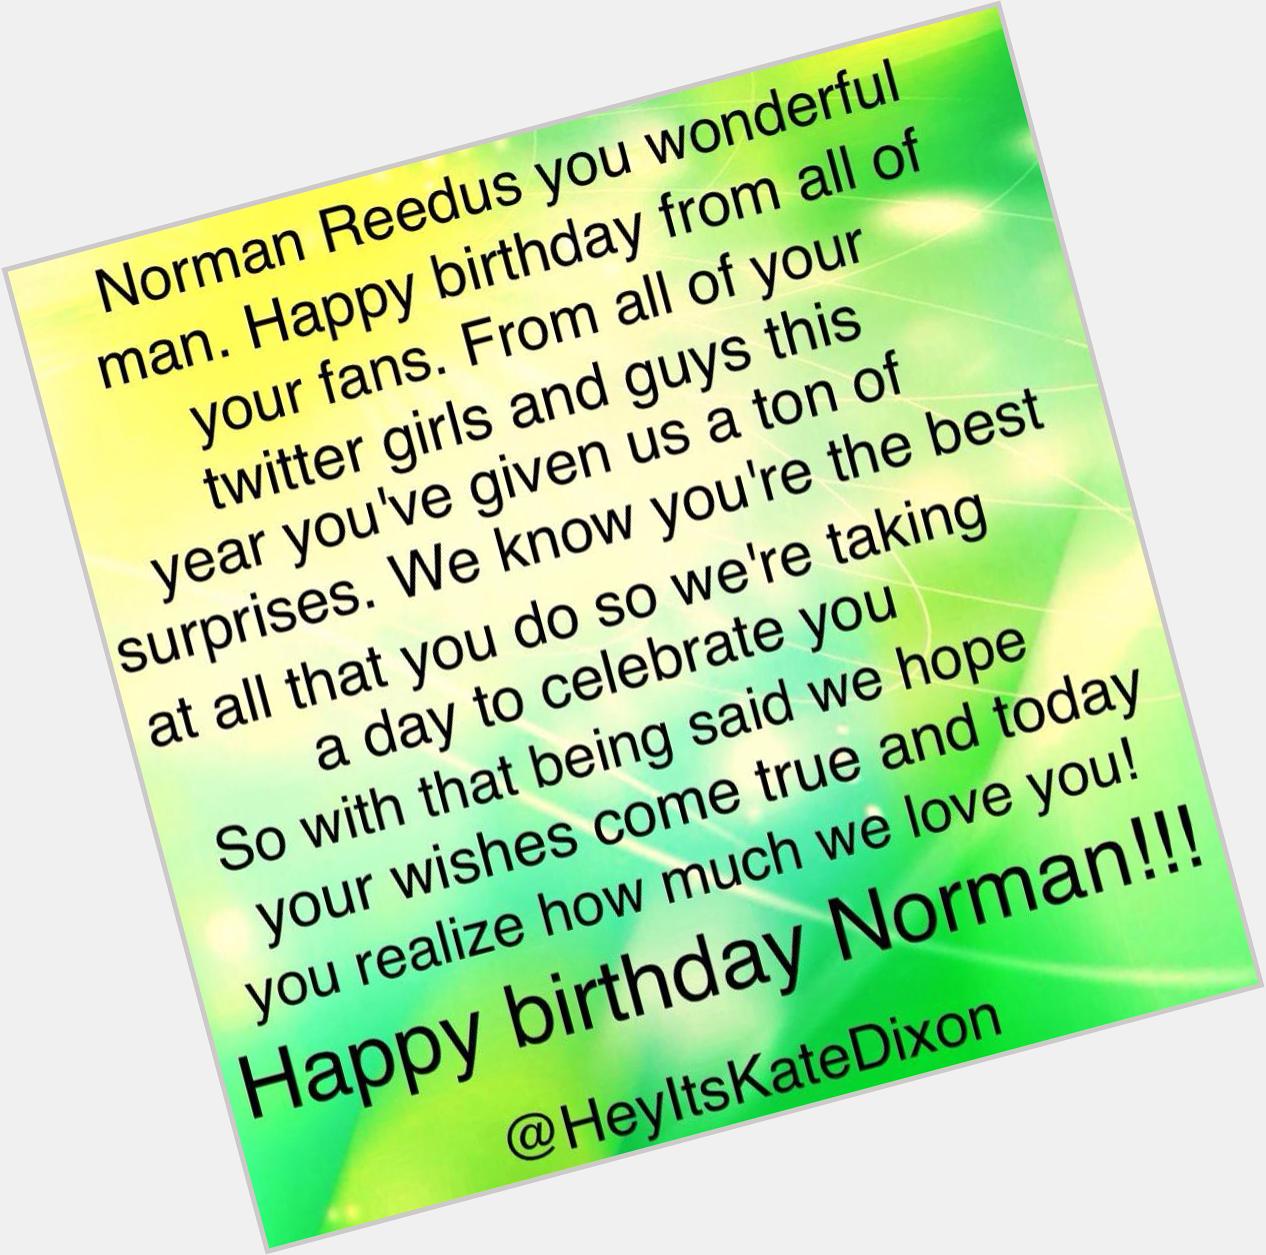  Happy (early) birthday Norman Reedus!!!!   